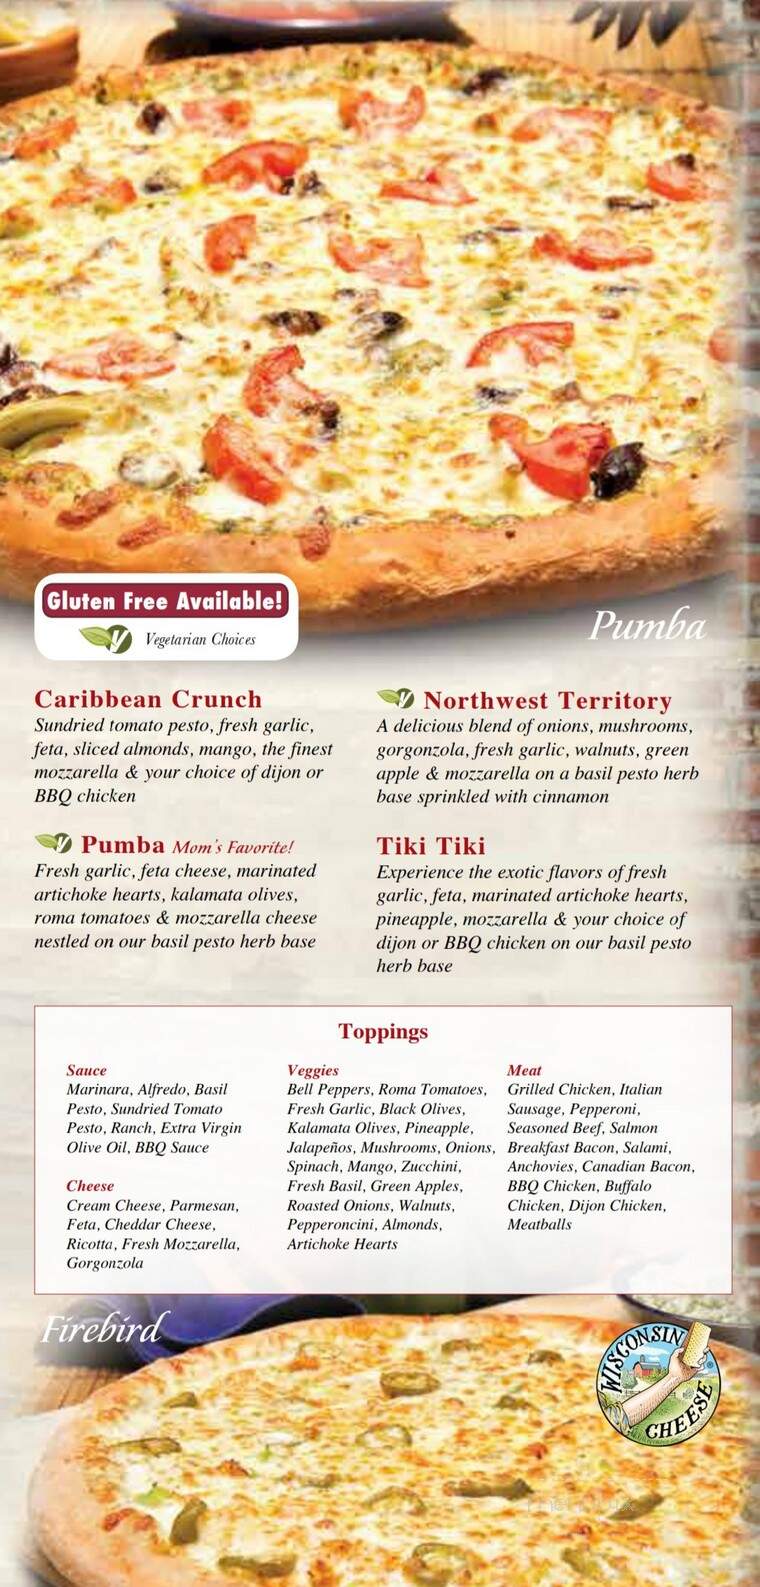 Sahara Pizza - Lake Stevens, WA